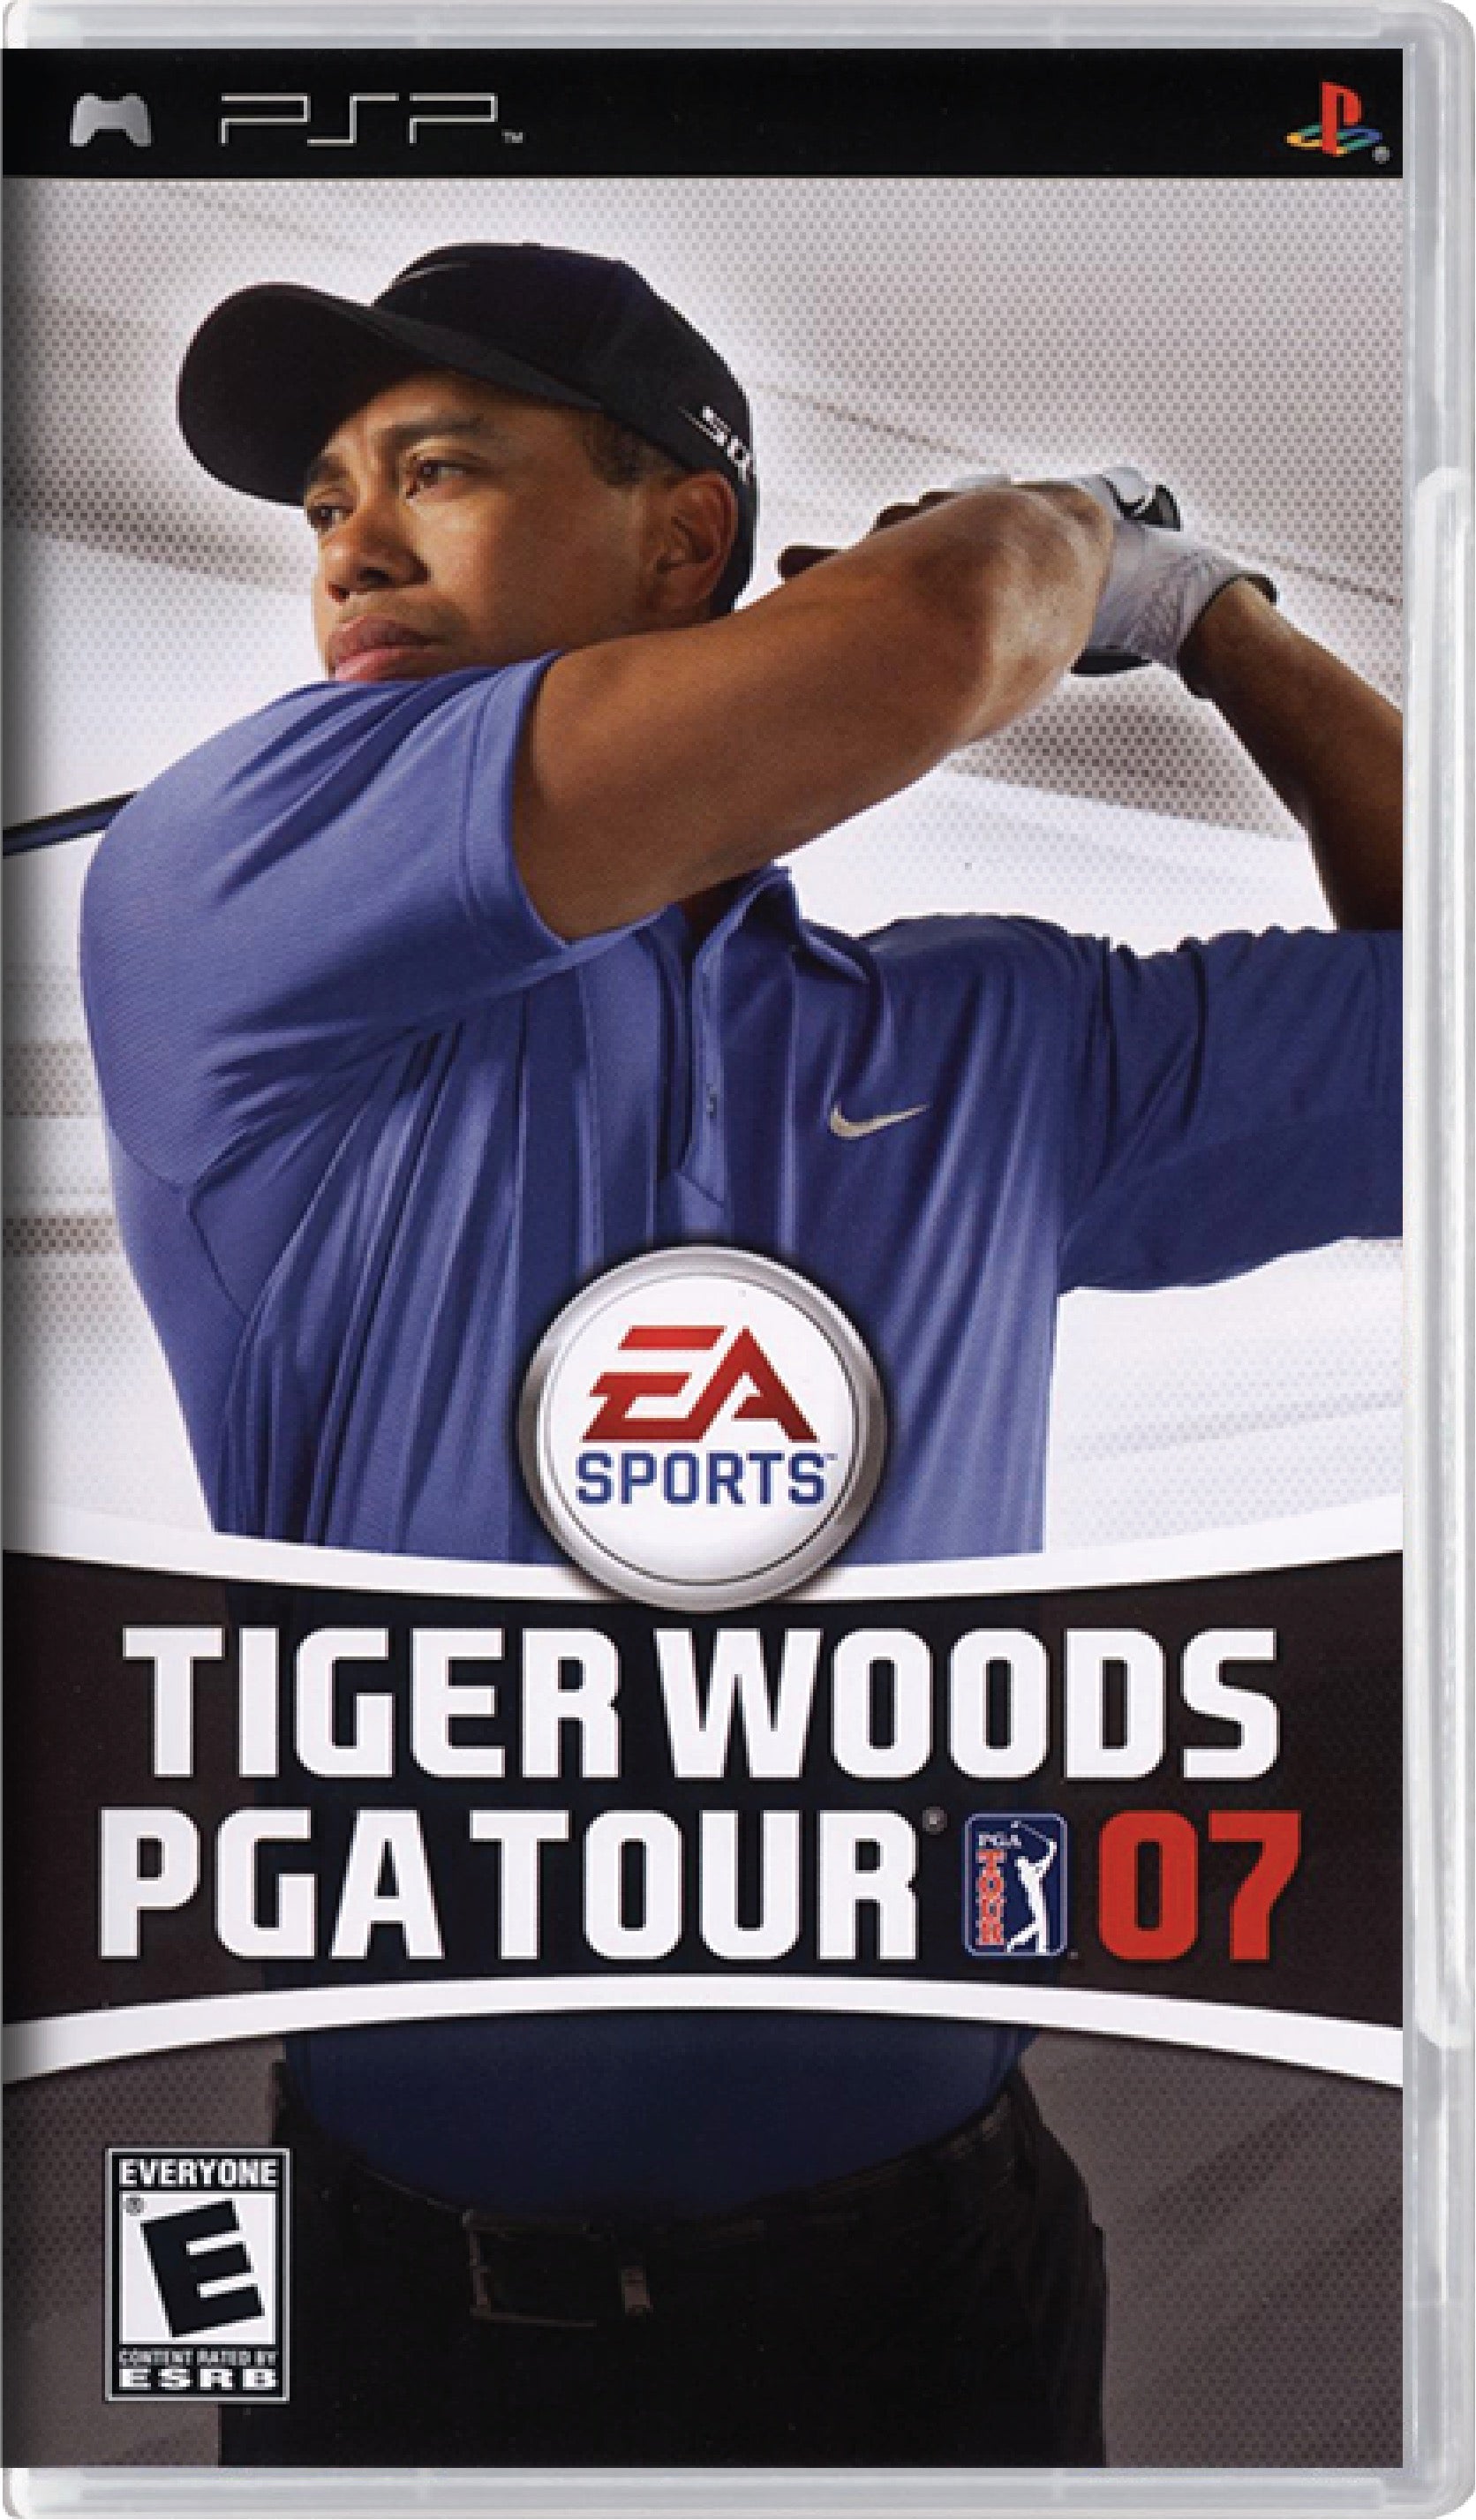 Tiger Woods PGA Tour 07 Cover Art